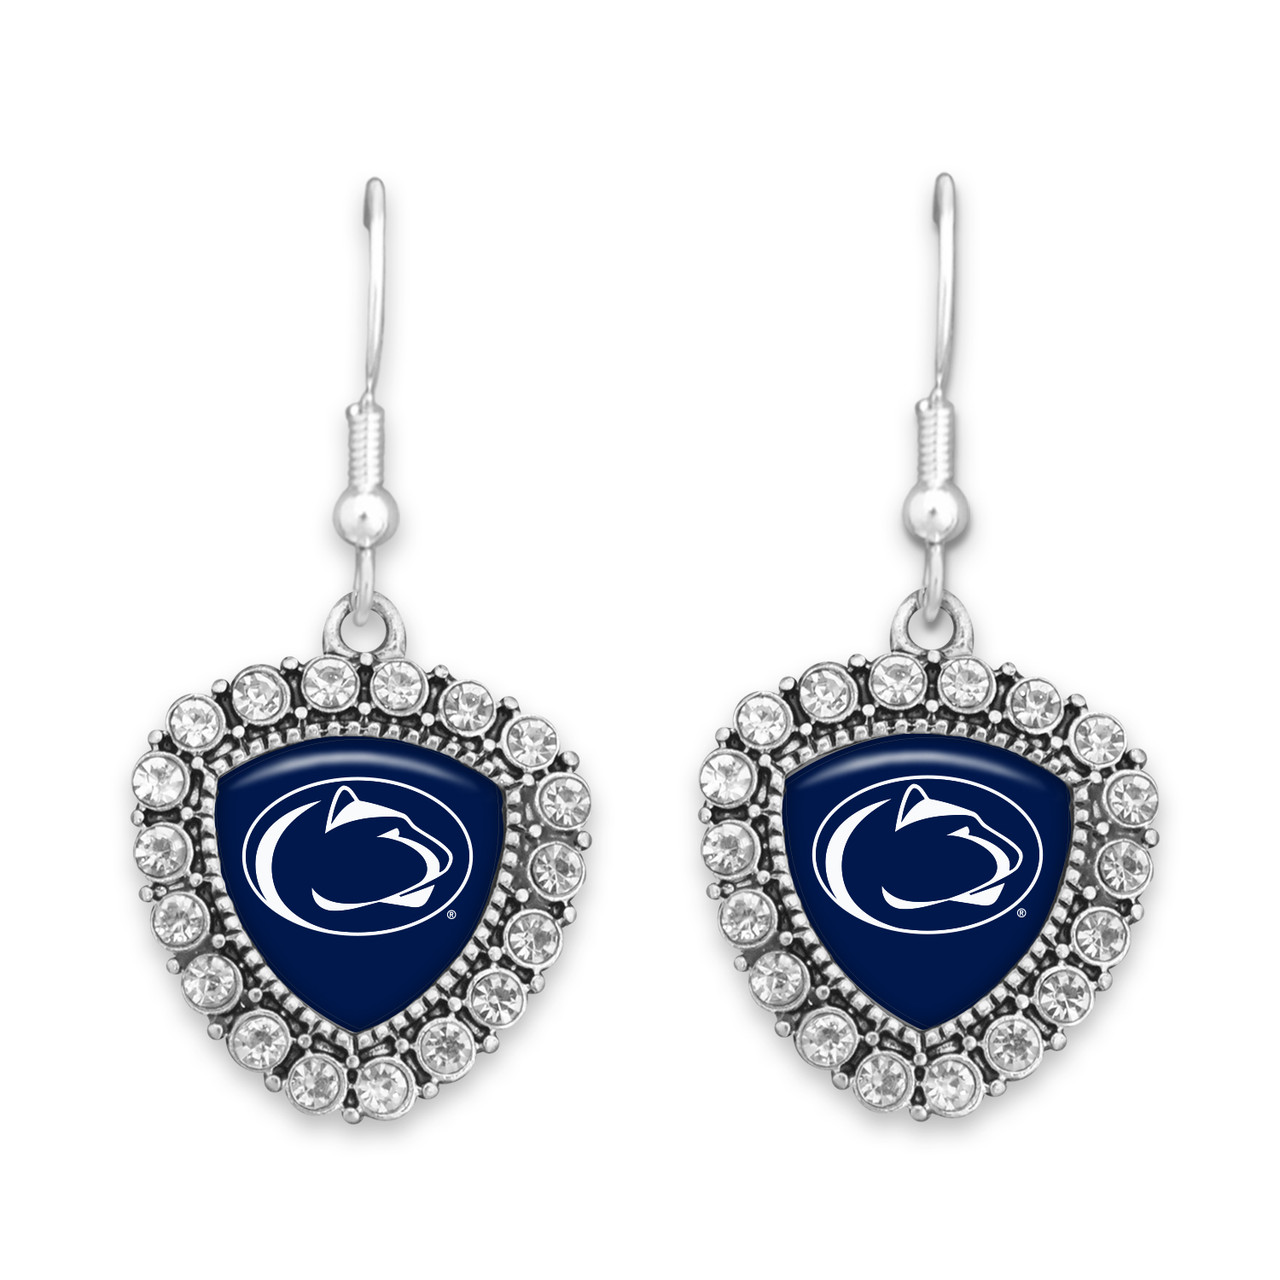 Penn State Nittany Lions Earrings- Brooke